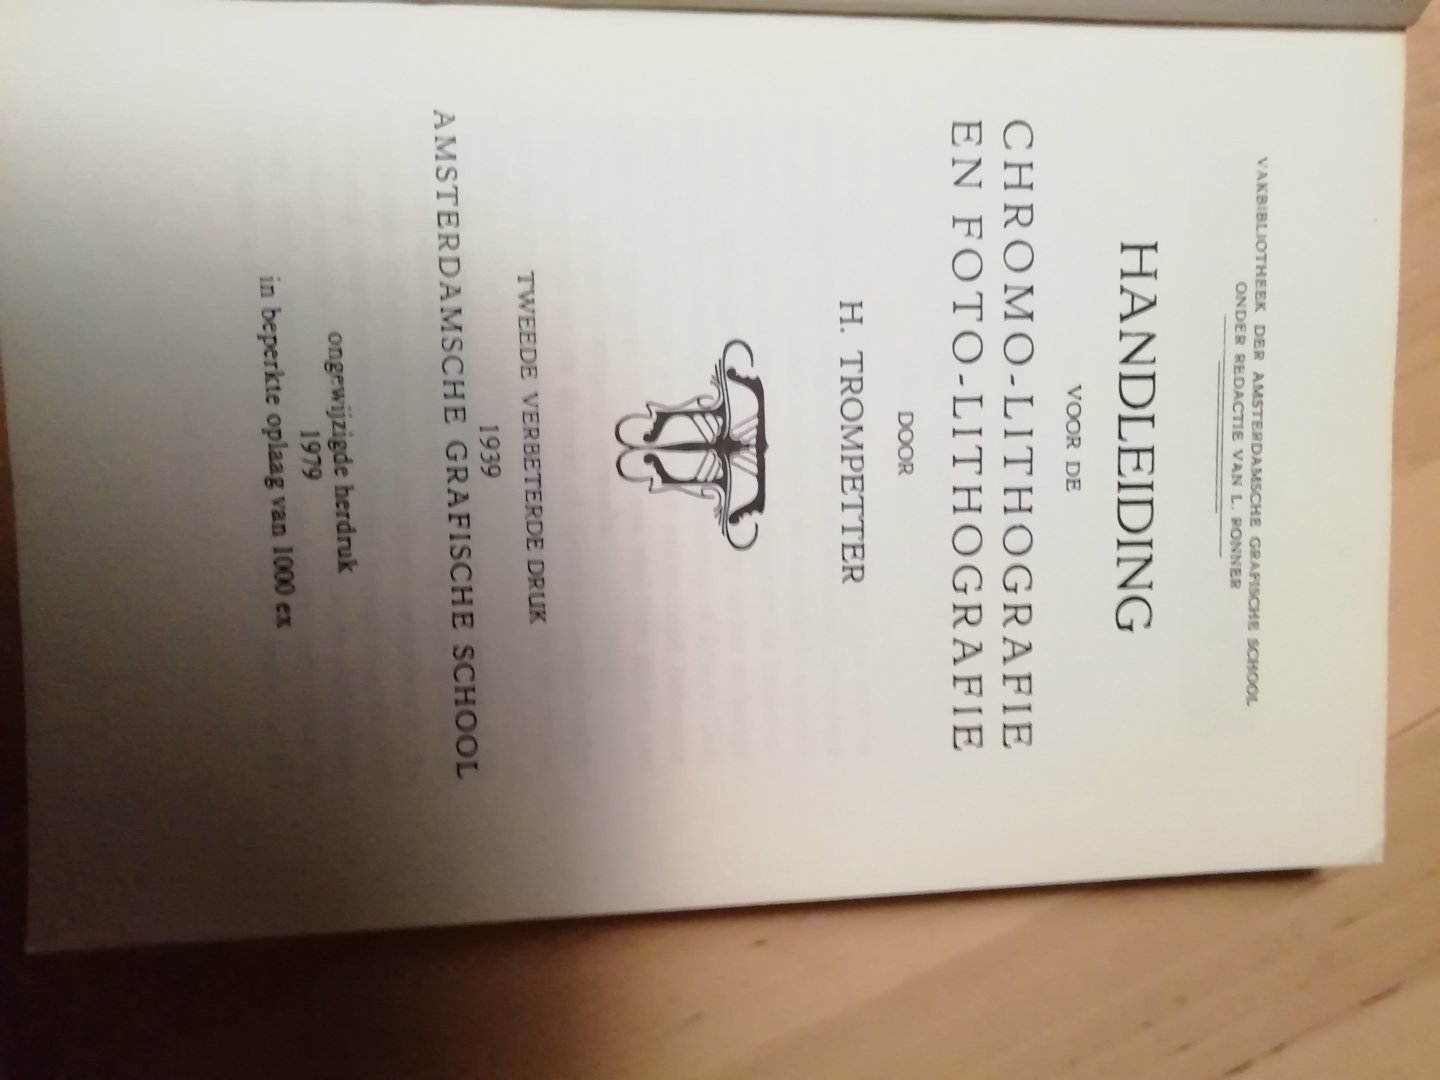 H. TROMPETTER - Handleiding voor de chroom-lithografie en foto-lithografie